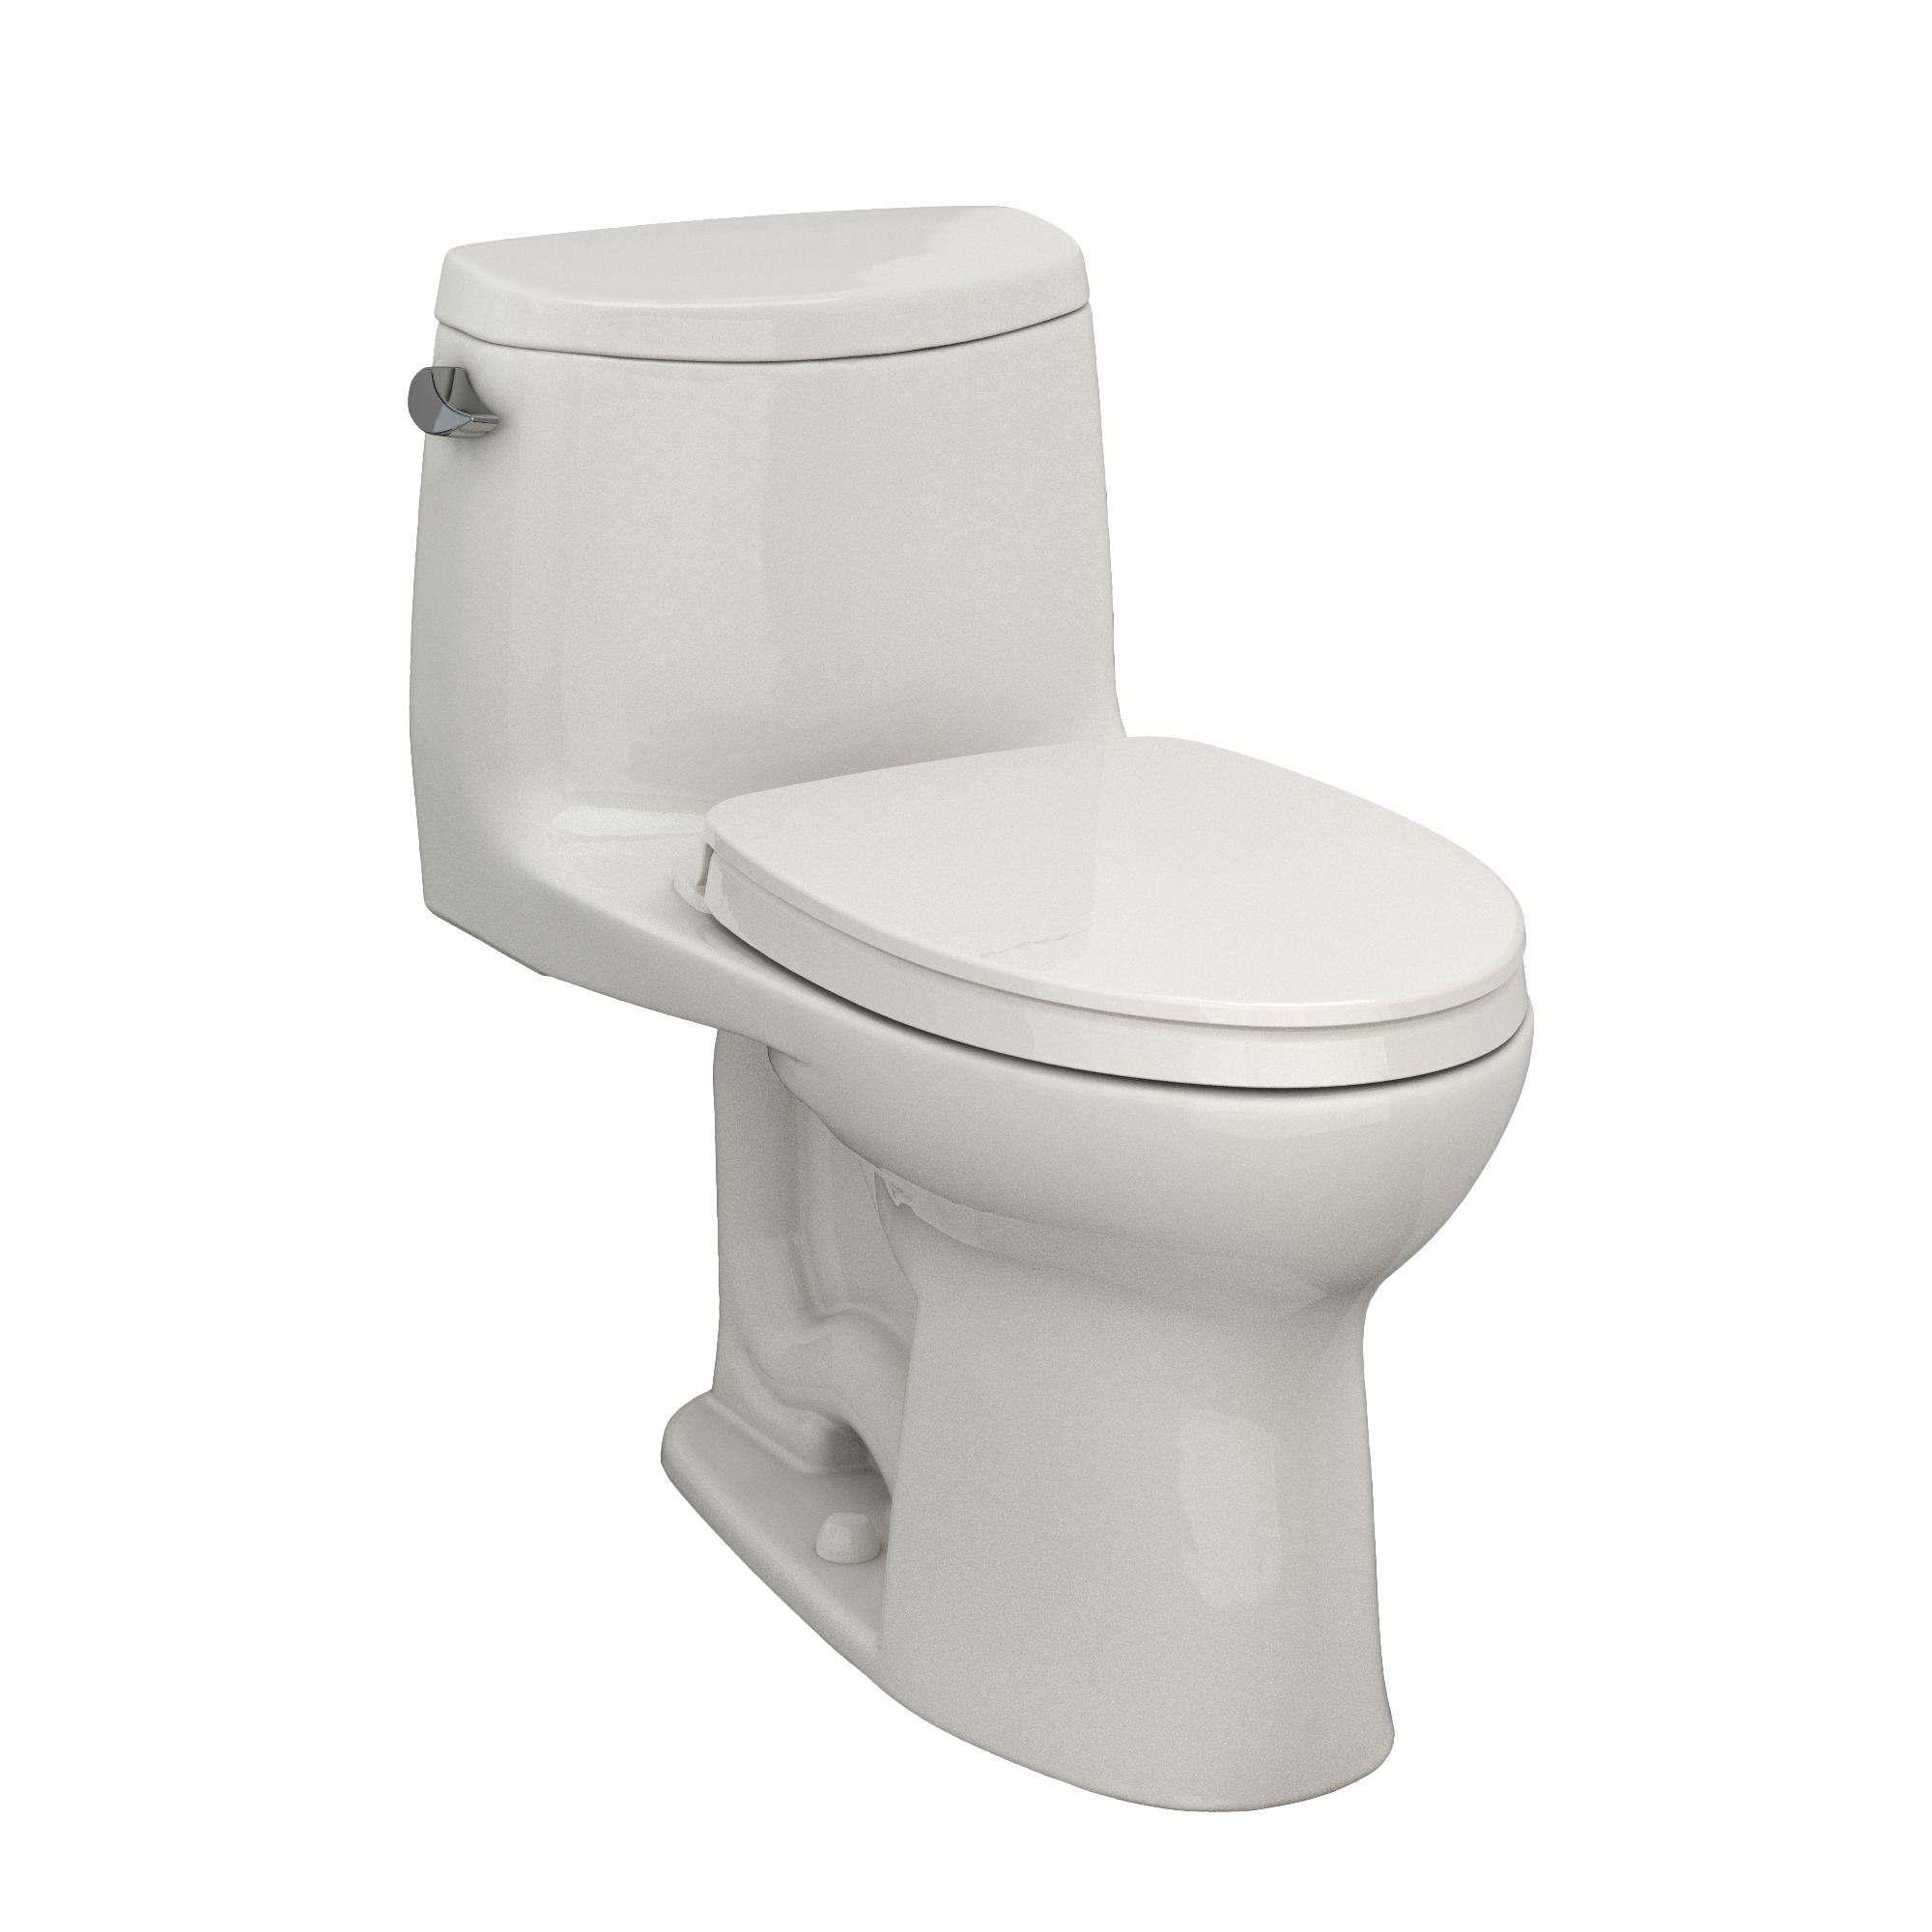 Toto Ultramax II One-piece Toilet 1.28 GPF